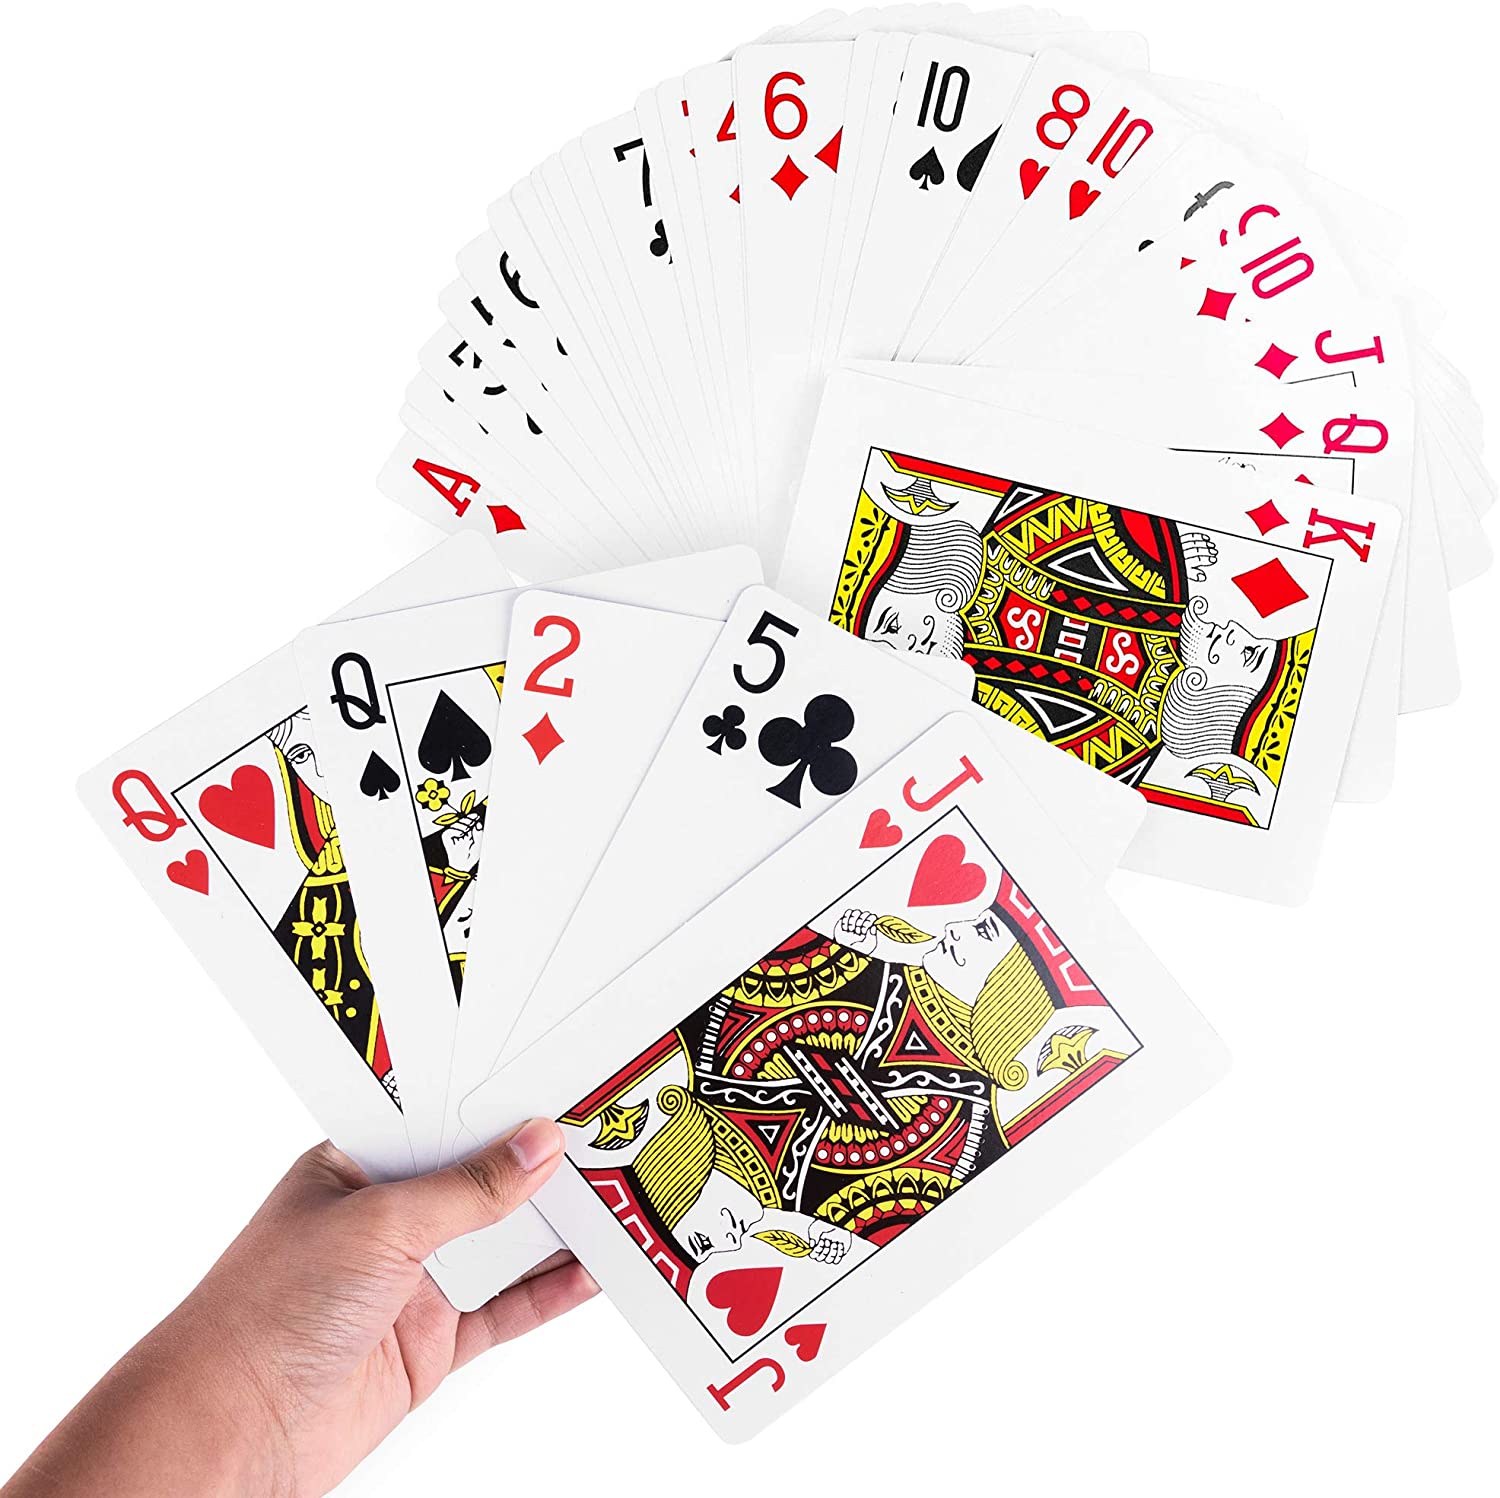 ENERMOUS-JUMBO-MEGA- Playing Cards- las vegas casino decorations gift shop